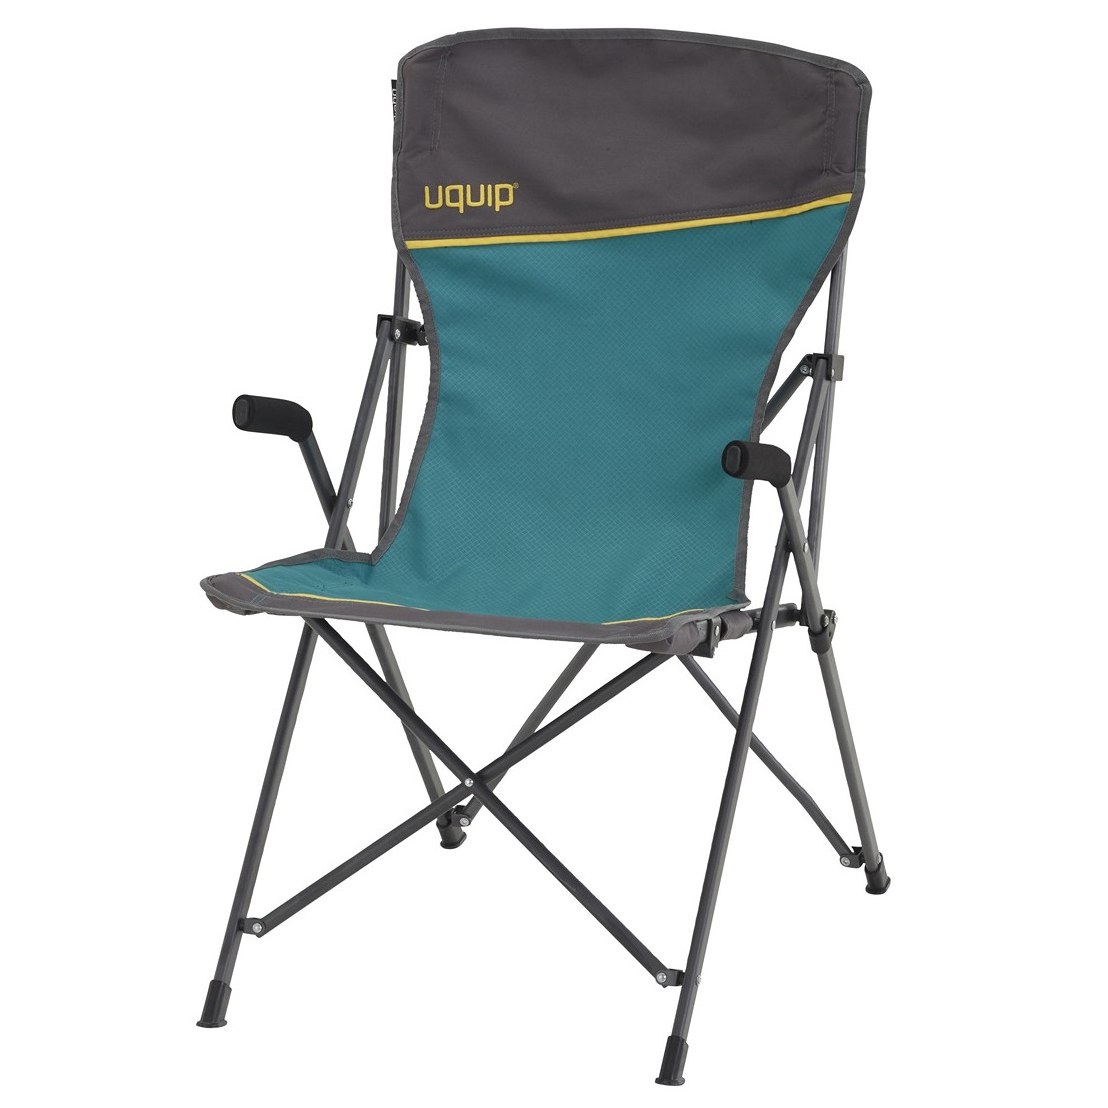 Productfoto van Uquip Izzy Folding Chair - petrol/grey